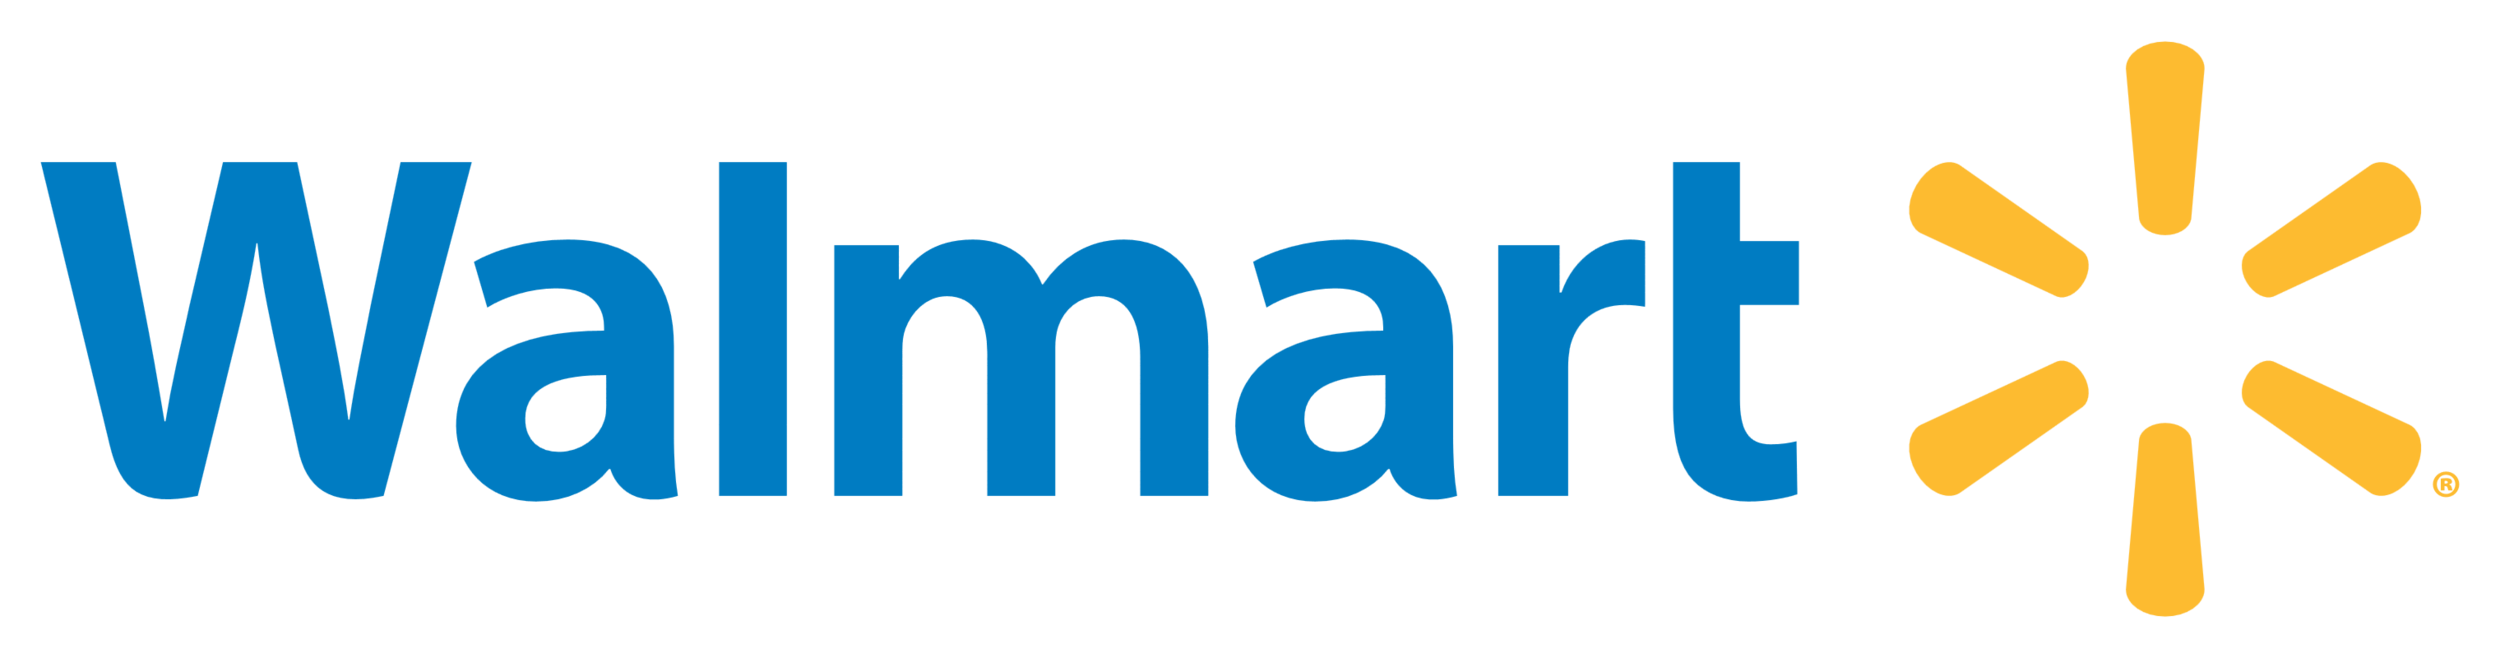 Walmart_logo_transparent_png.png